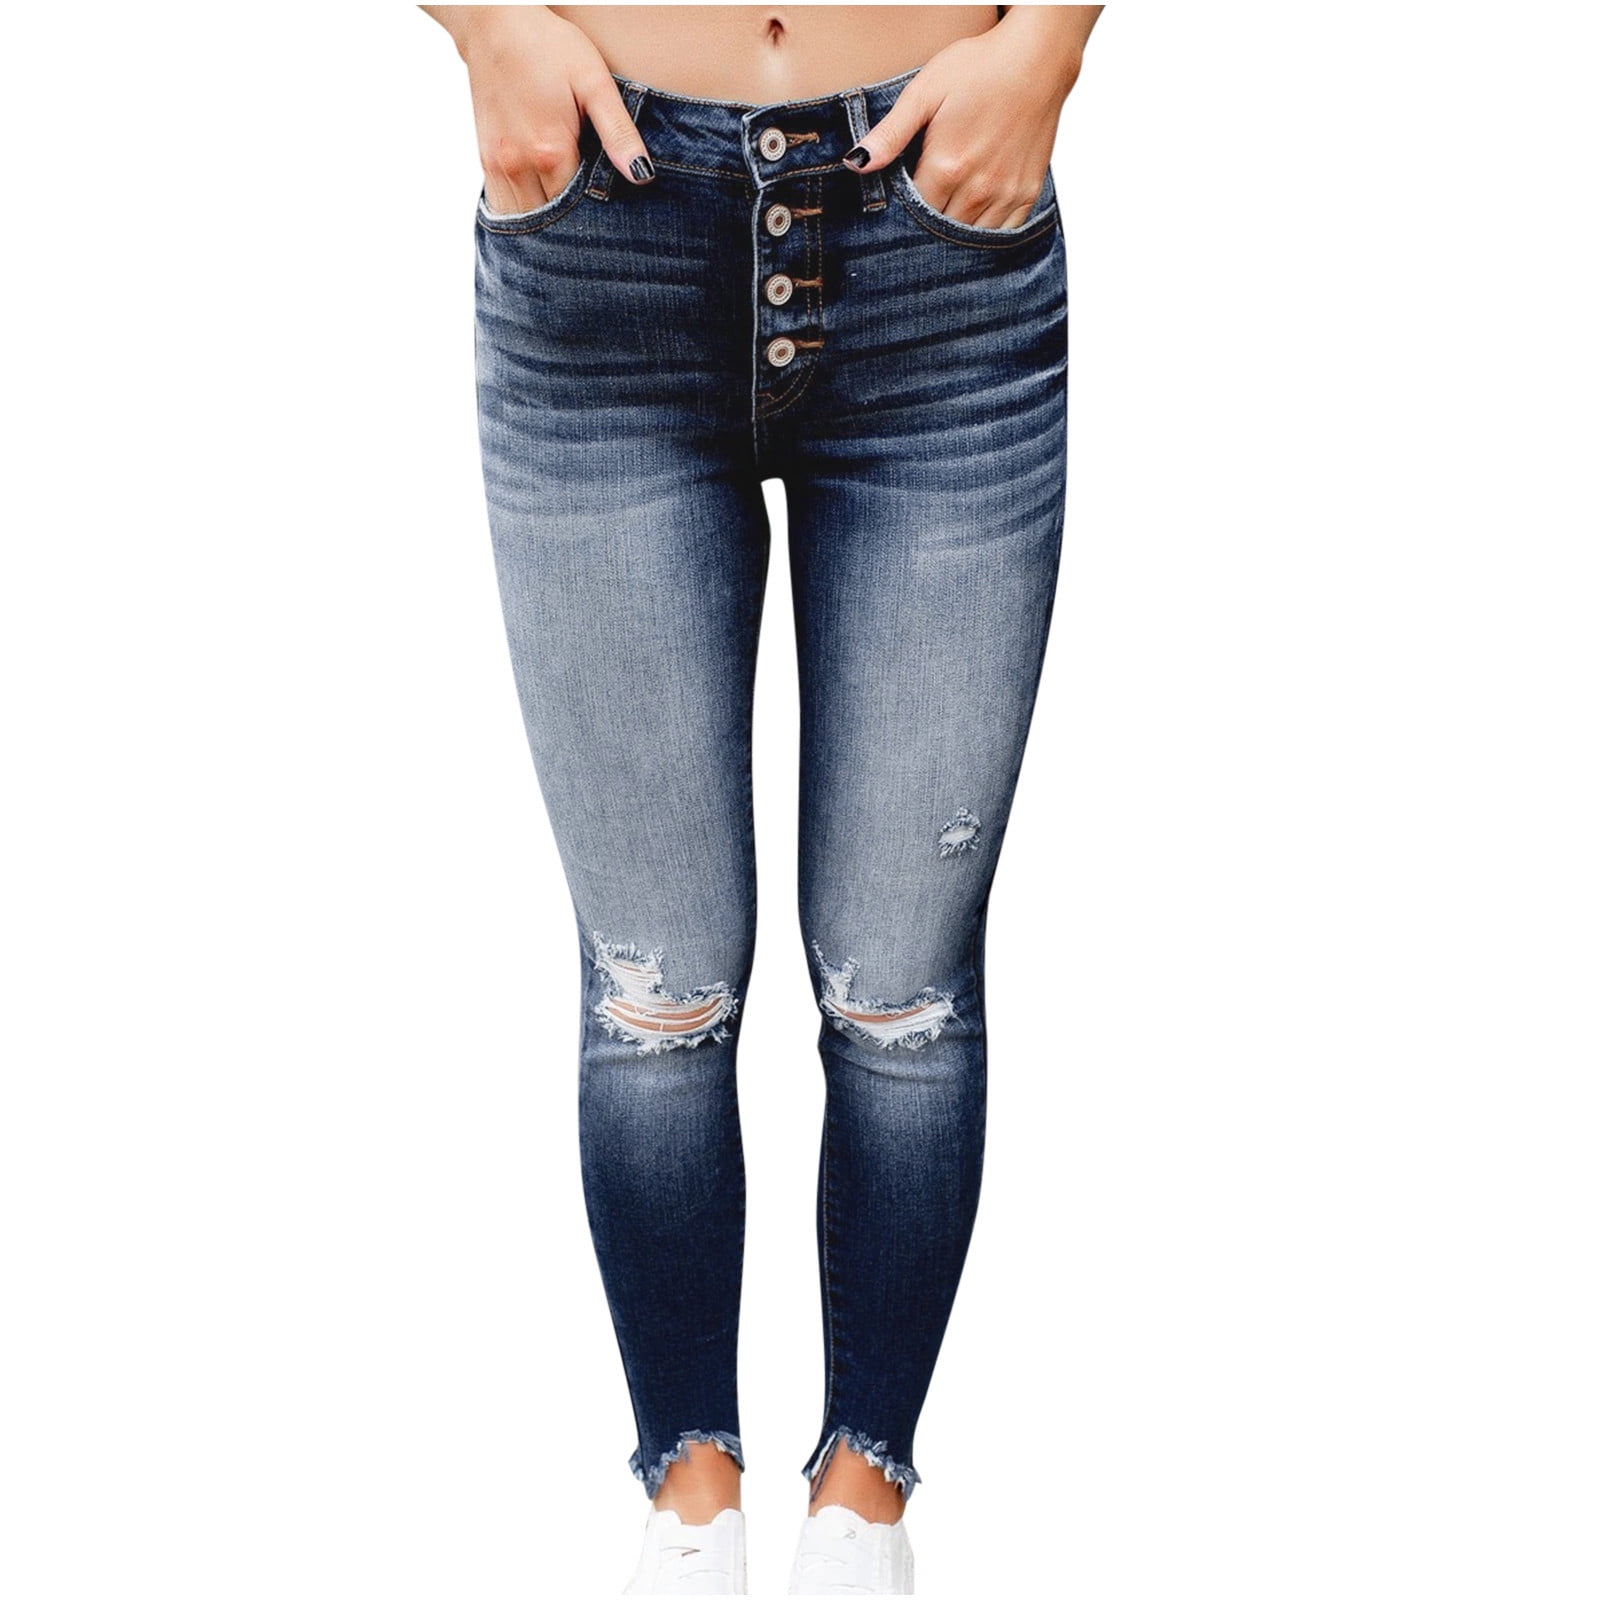 Fiorella Shapewear - New Butt Lift Jeans Colombian Levanta Cola Buy here